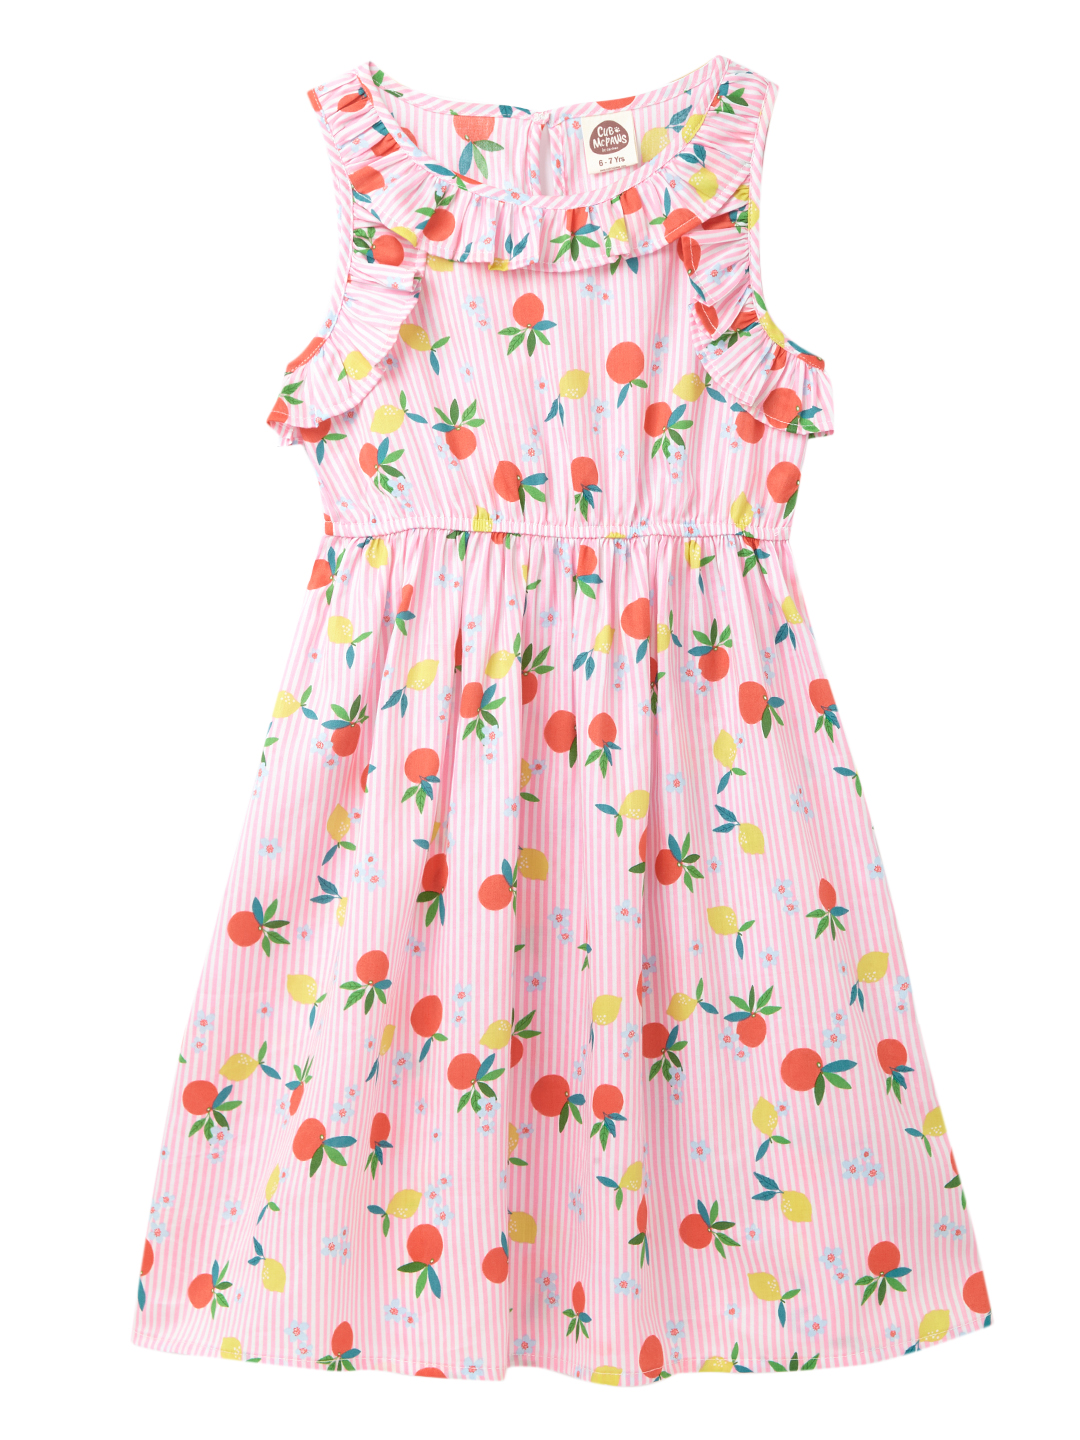 Girls Regular Rayon Fashion Dress, Baby Pink